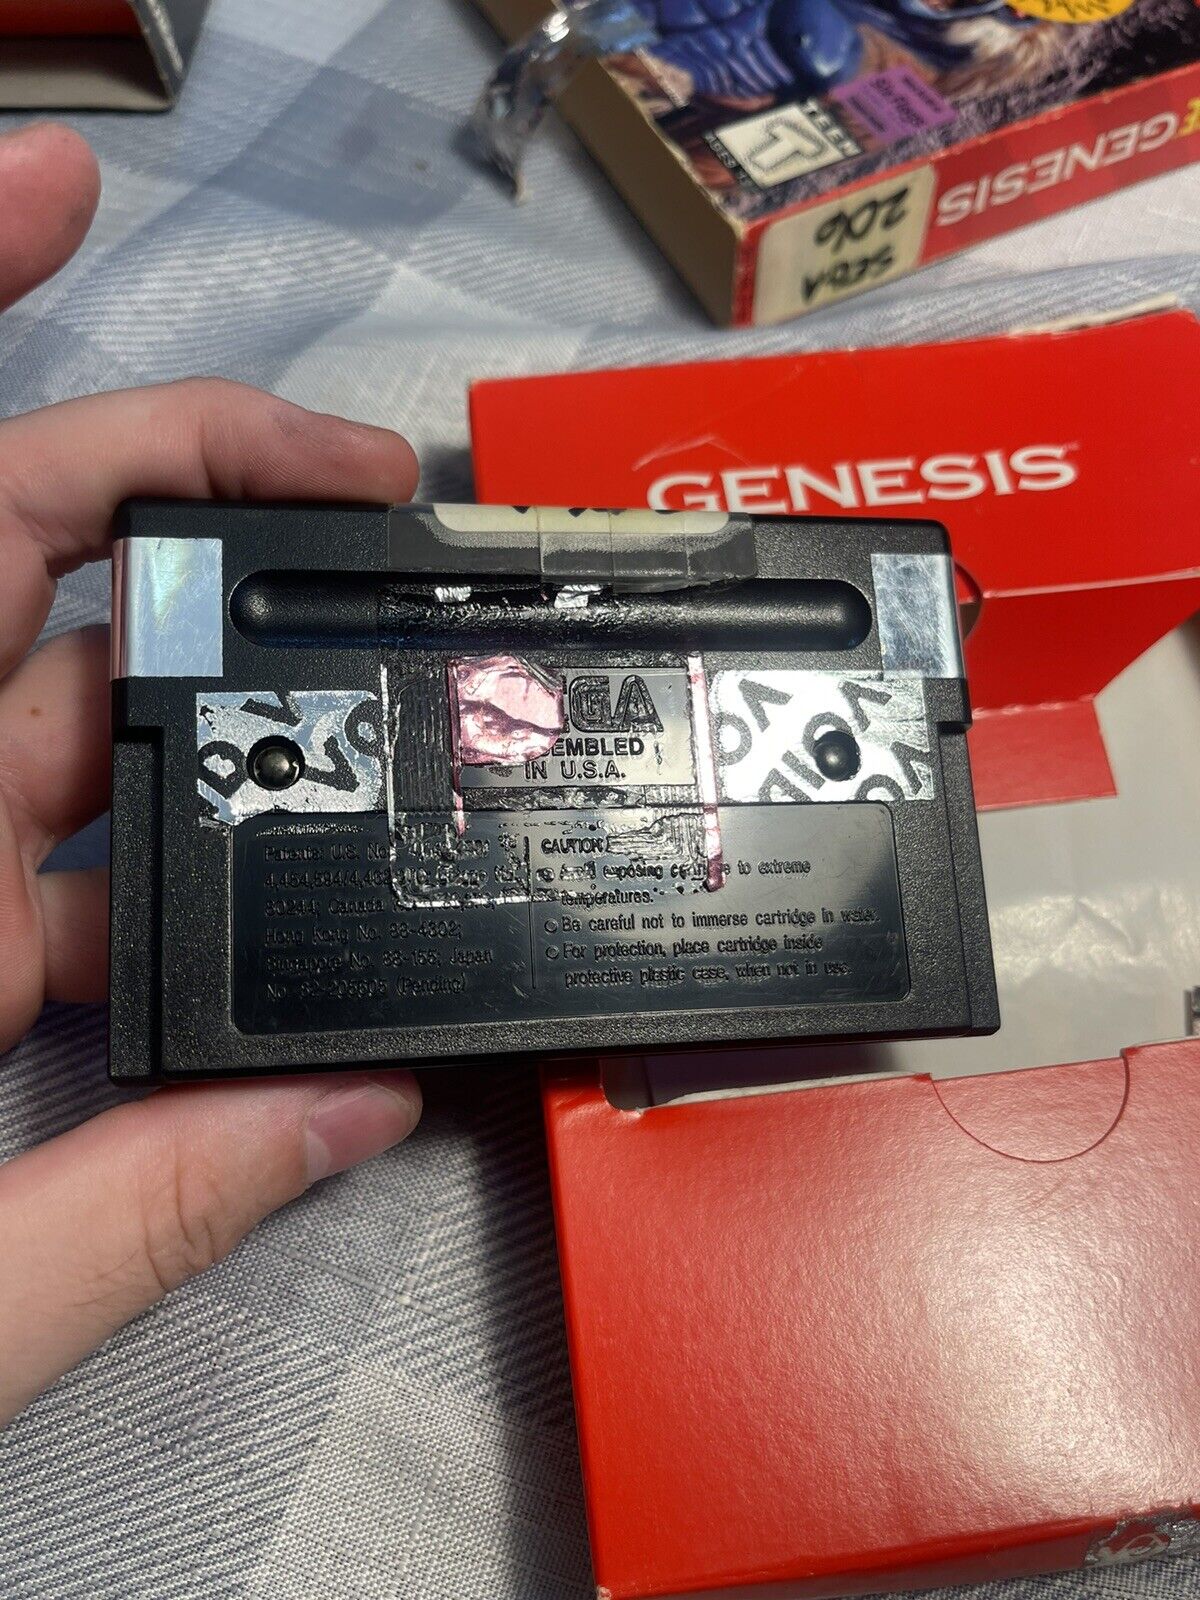 Primal Rage Sega Genesis Video Game with Box